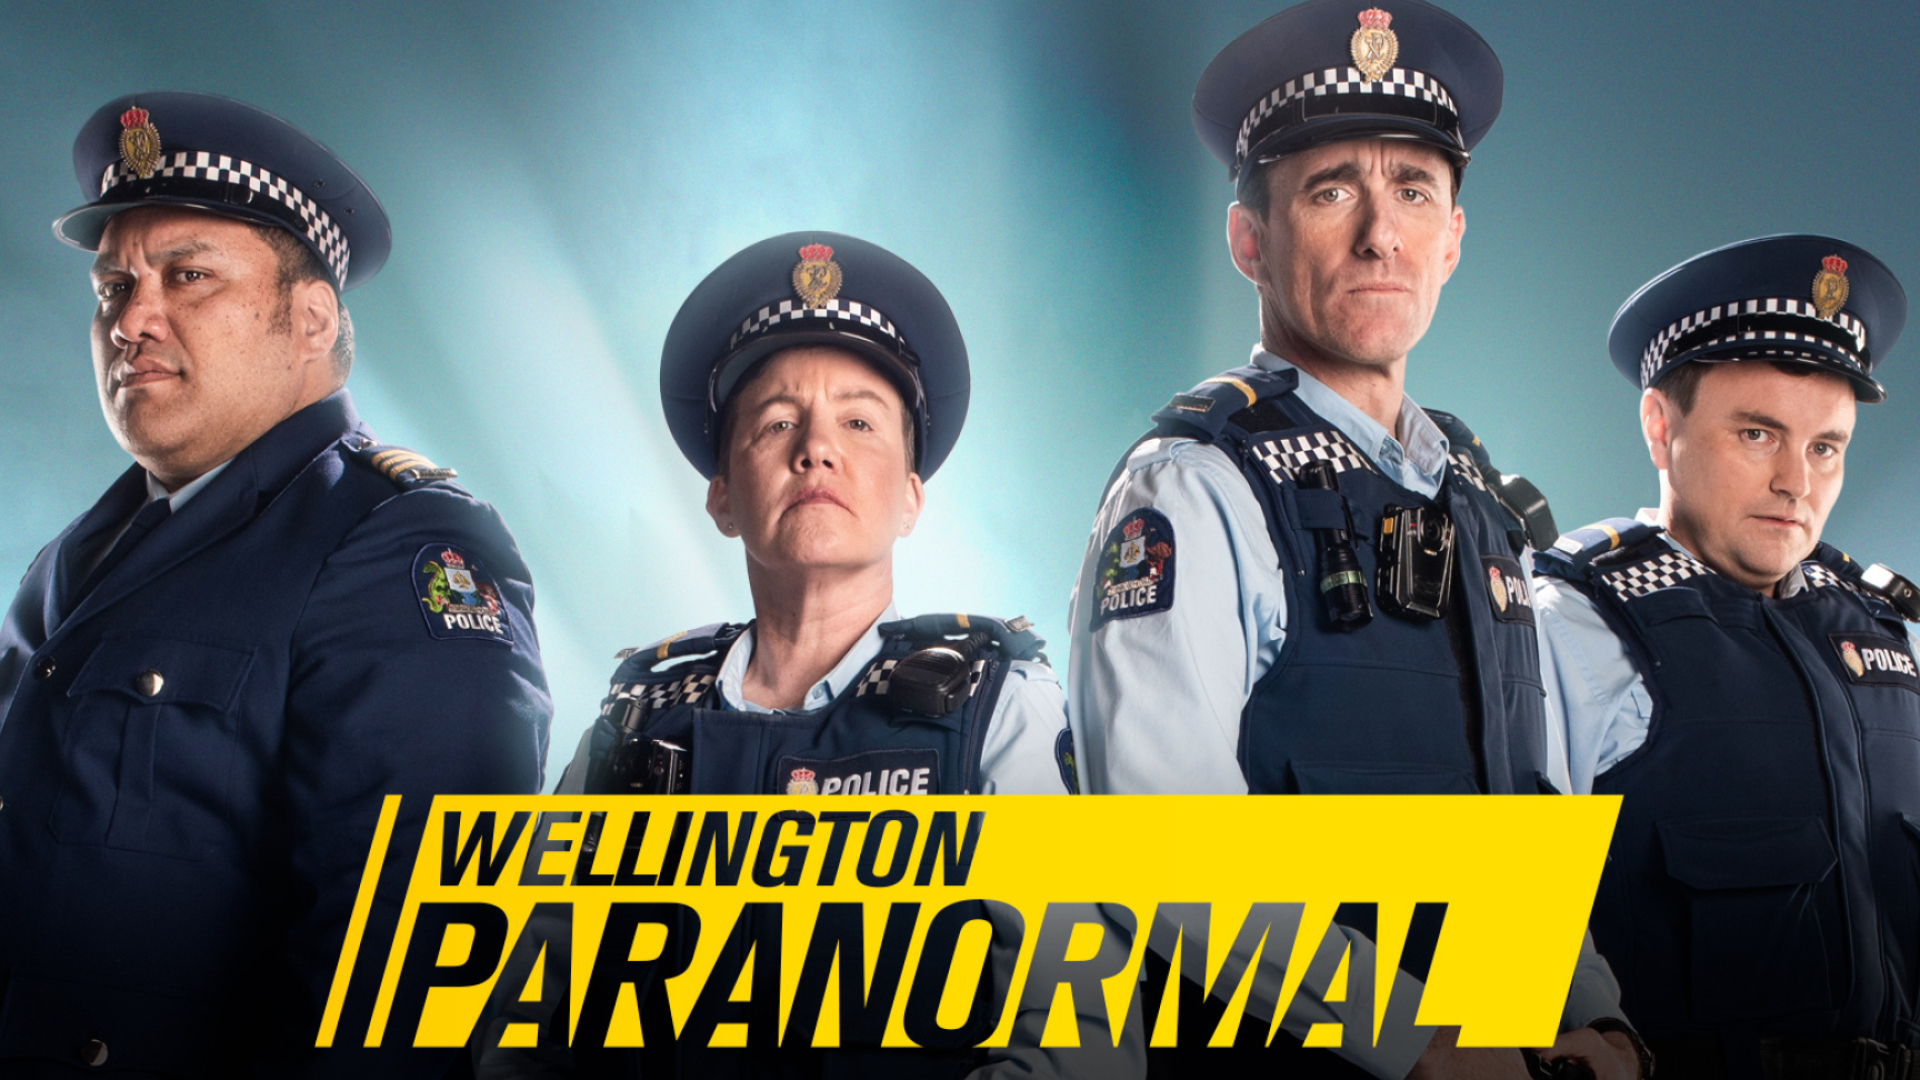 Wellington Paranormal TV Shows, The Wicked Man episode, Atlanta's CW69, 1920x1080 Full HD Desktop